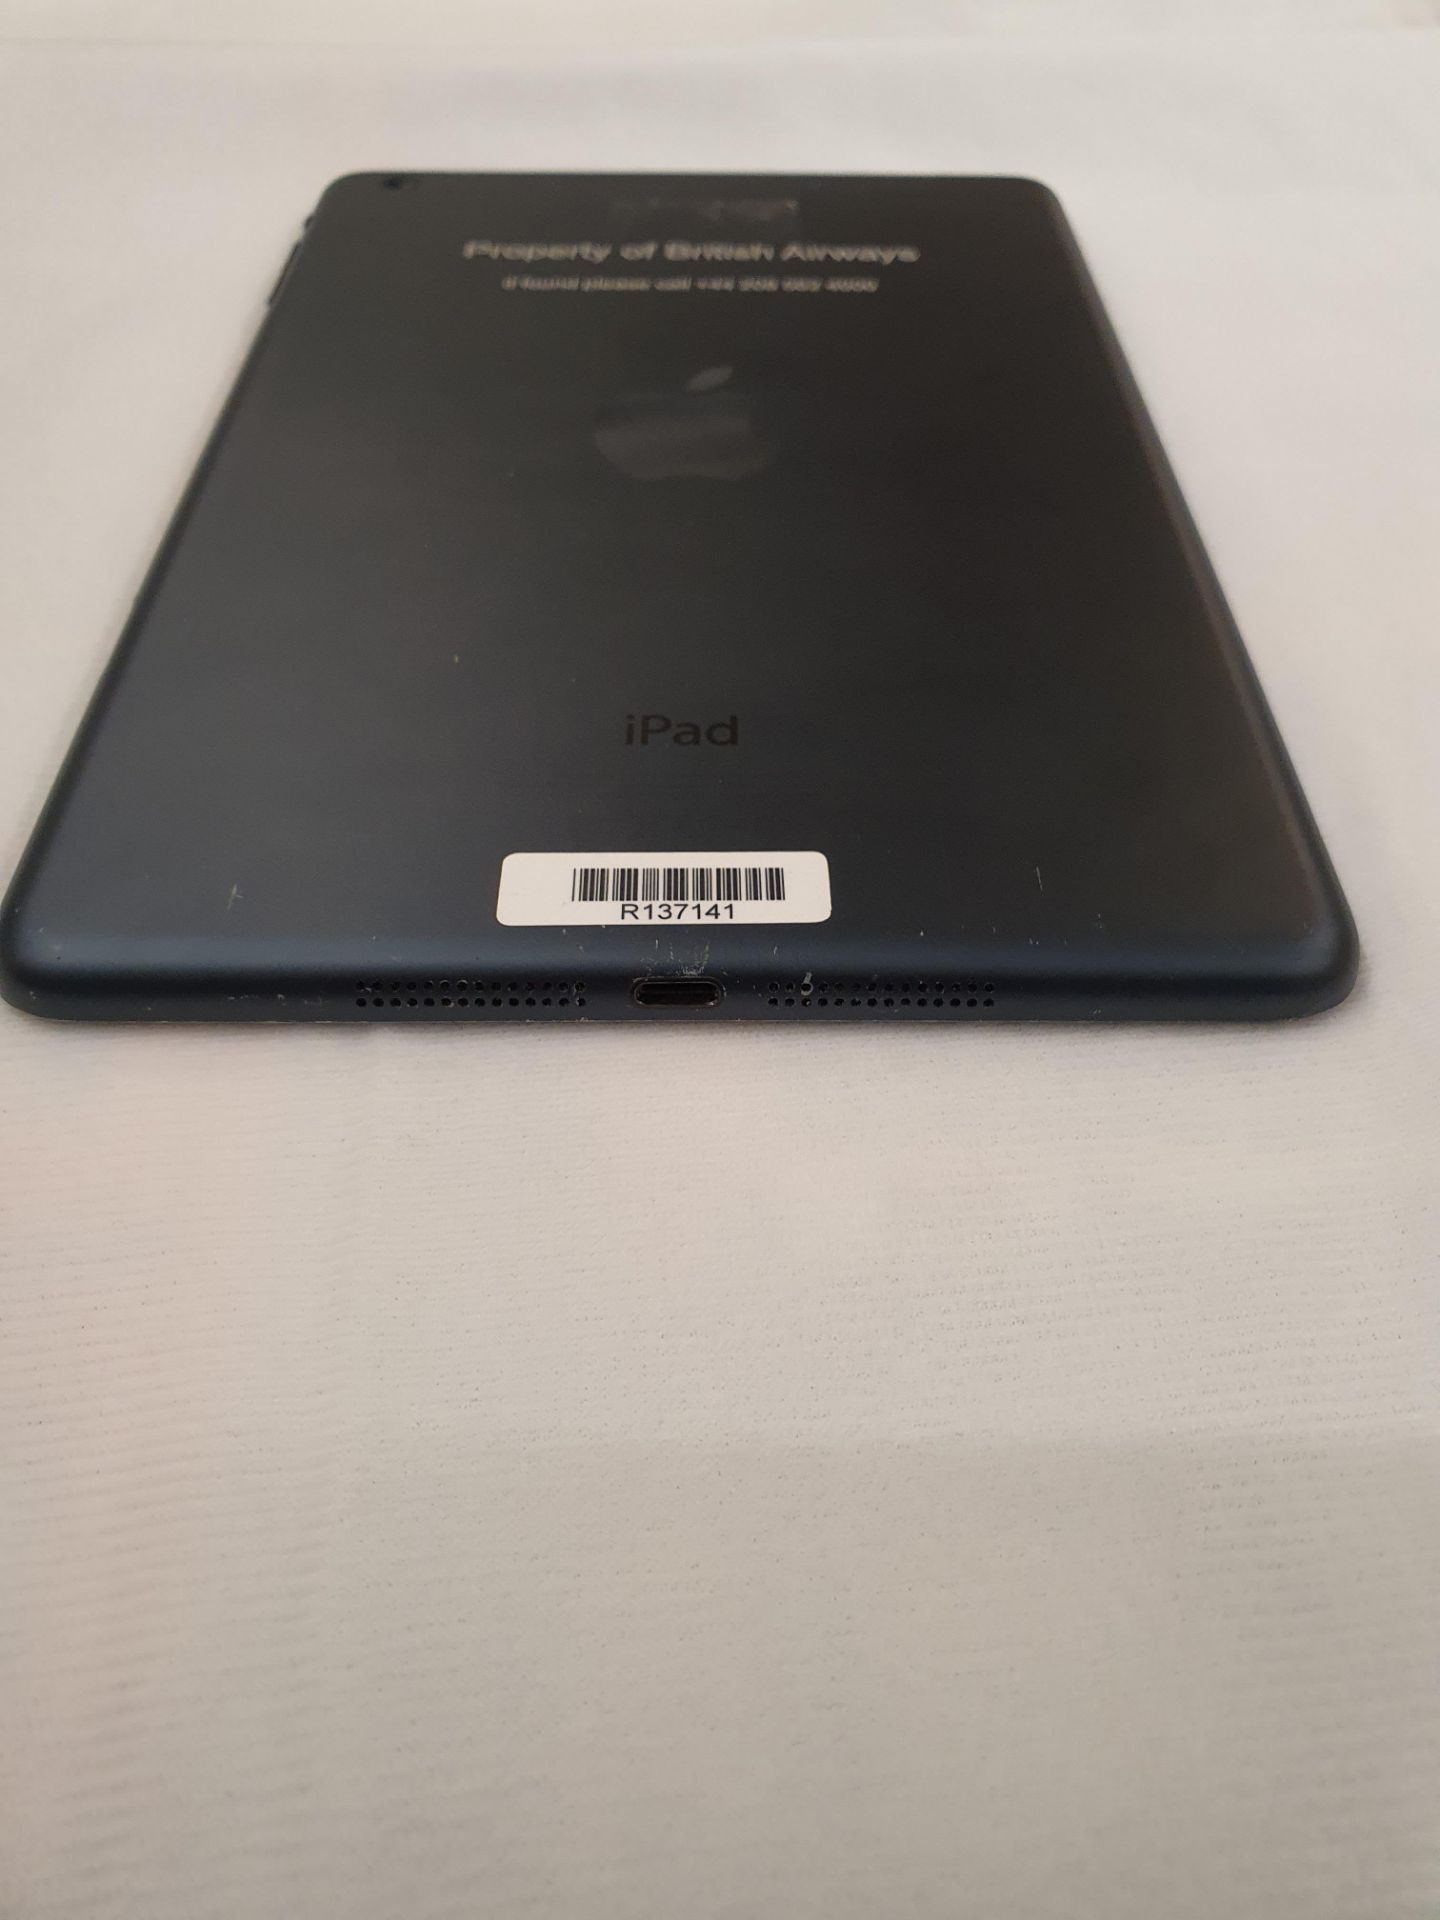 V Grade B Apple iPad Mini A1455 - Ex Lease (Has British Airways Engraving/Etching) - 16GB - Unit - Image 6 of 7